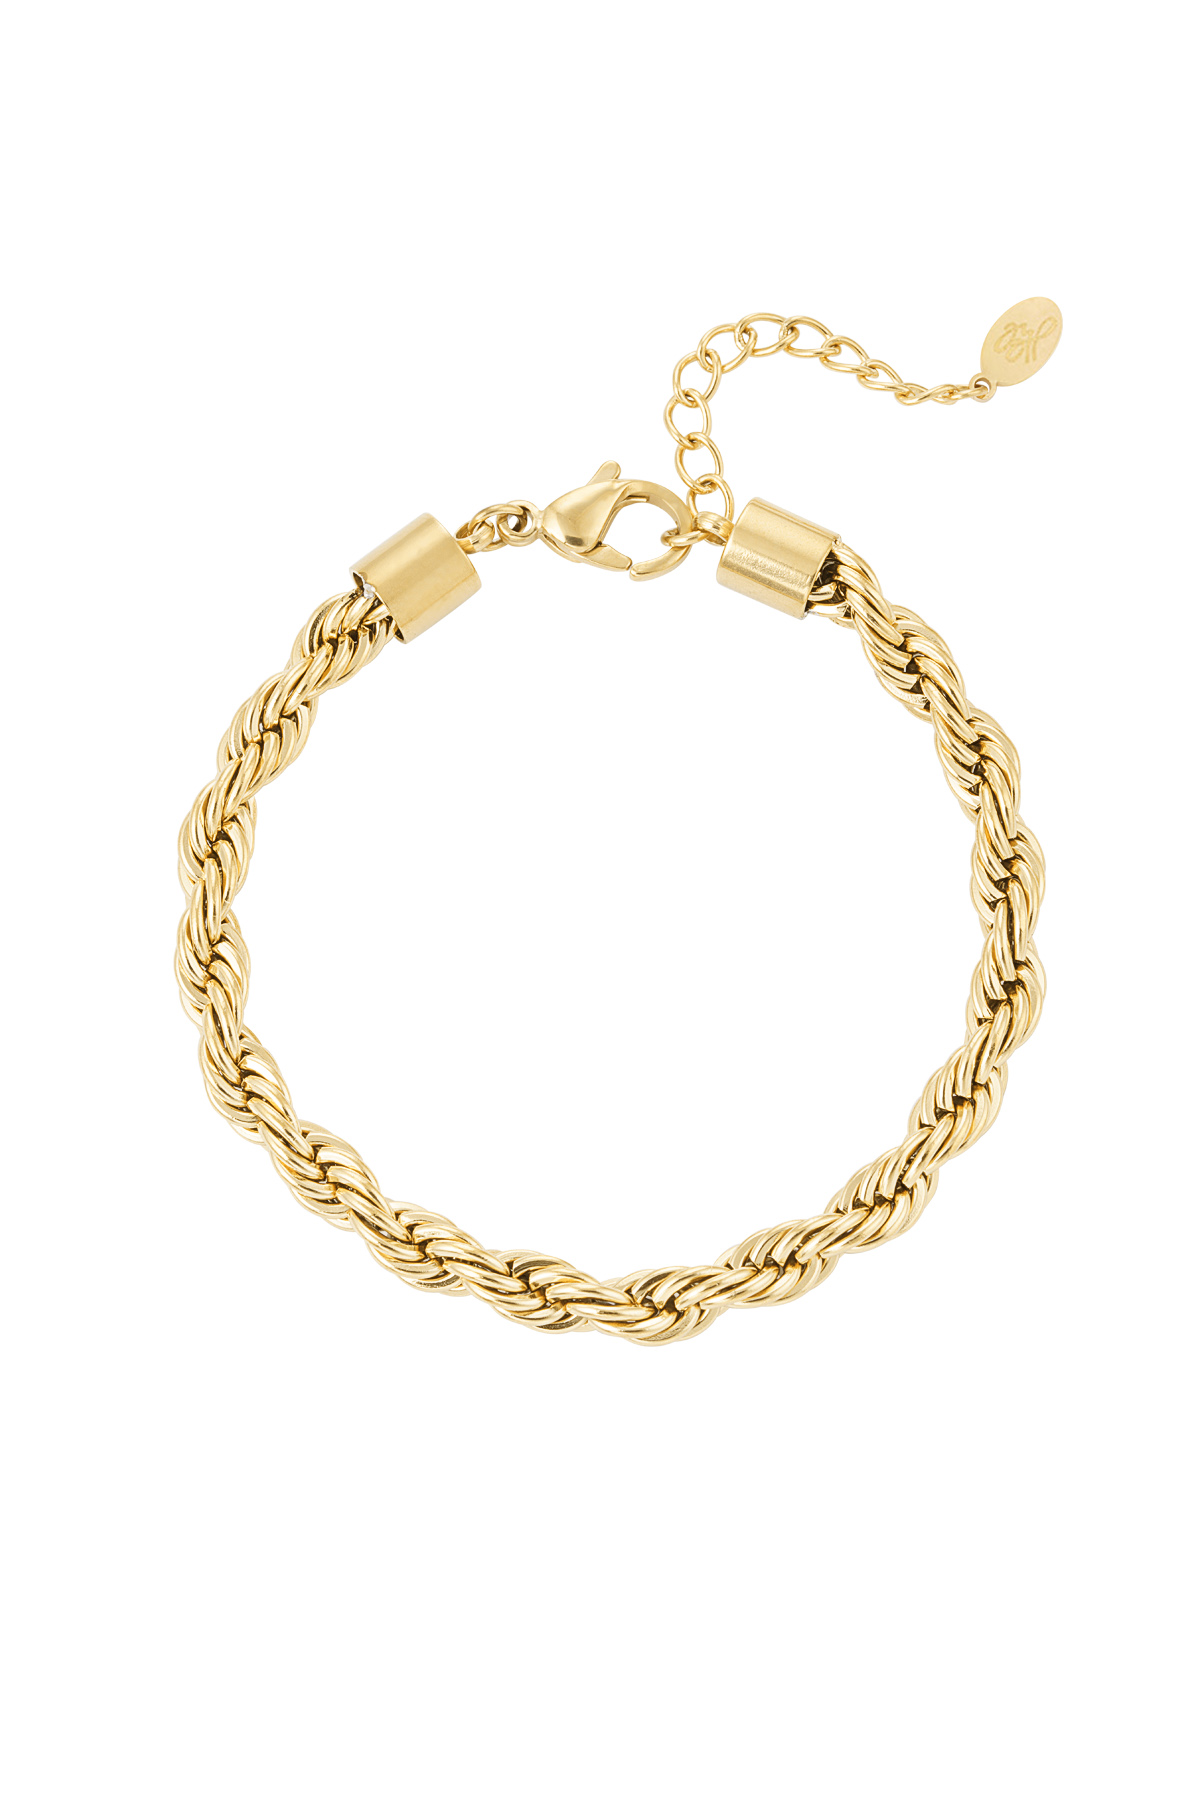 Unisex bracelet playful twist - gold - 4.5MM 